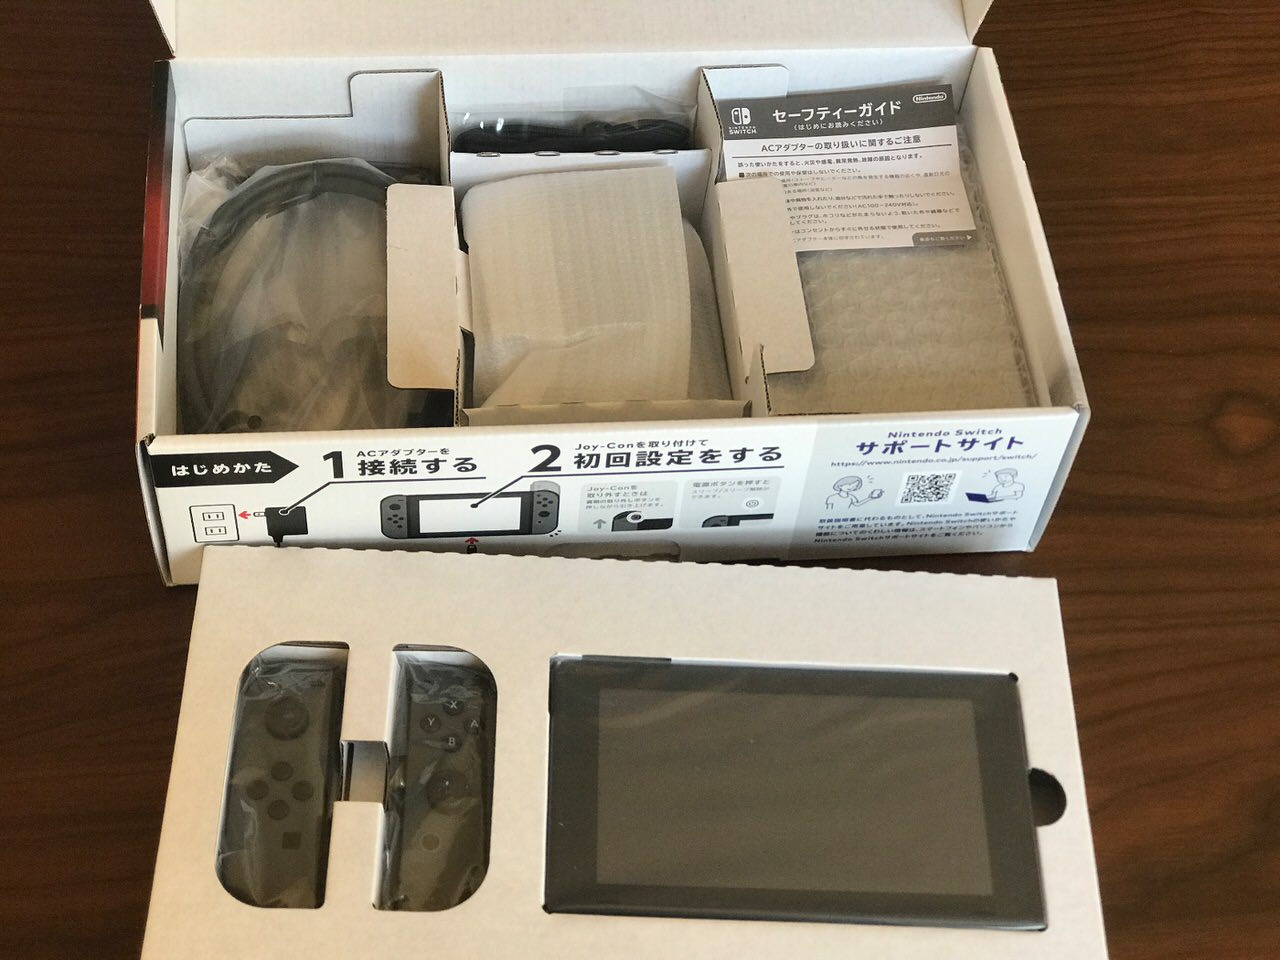 Nintendo switch setup 6750